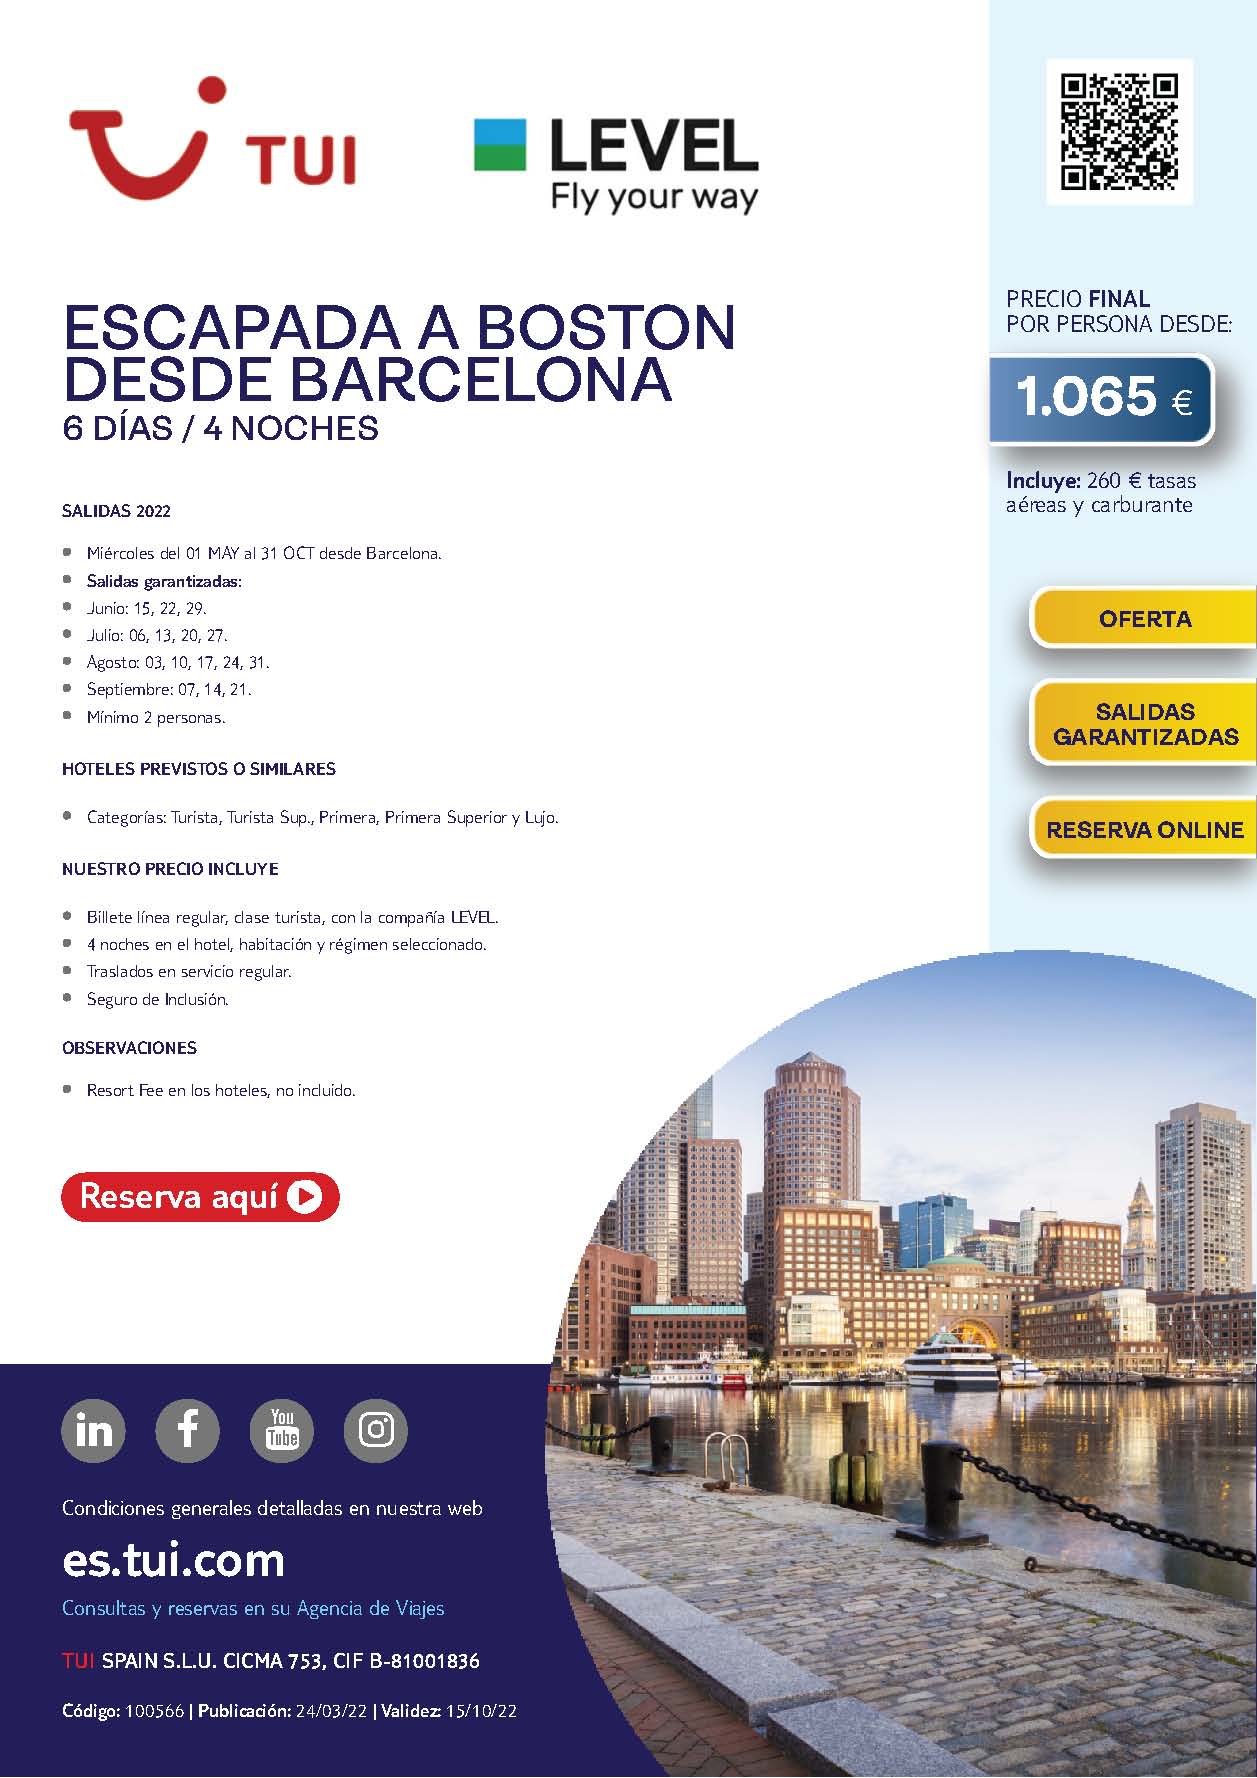 Oferta TUI Estados Unidos Escapada a Boston 6 dias Mayo a Octubre 2022 salida en vuelo directo desde Barcelona vuelos Level